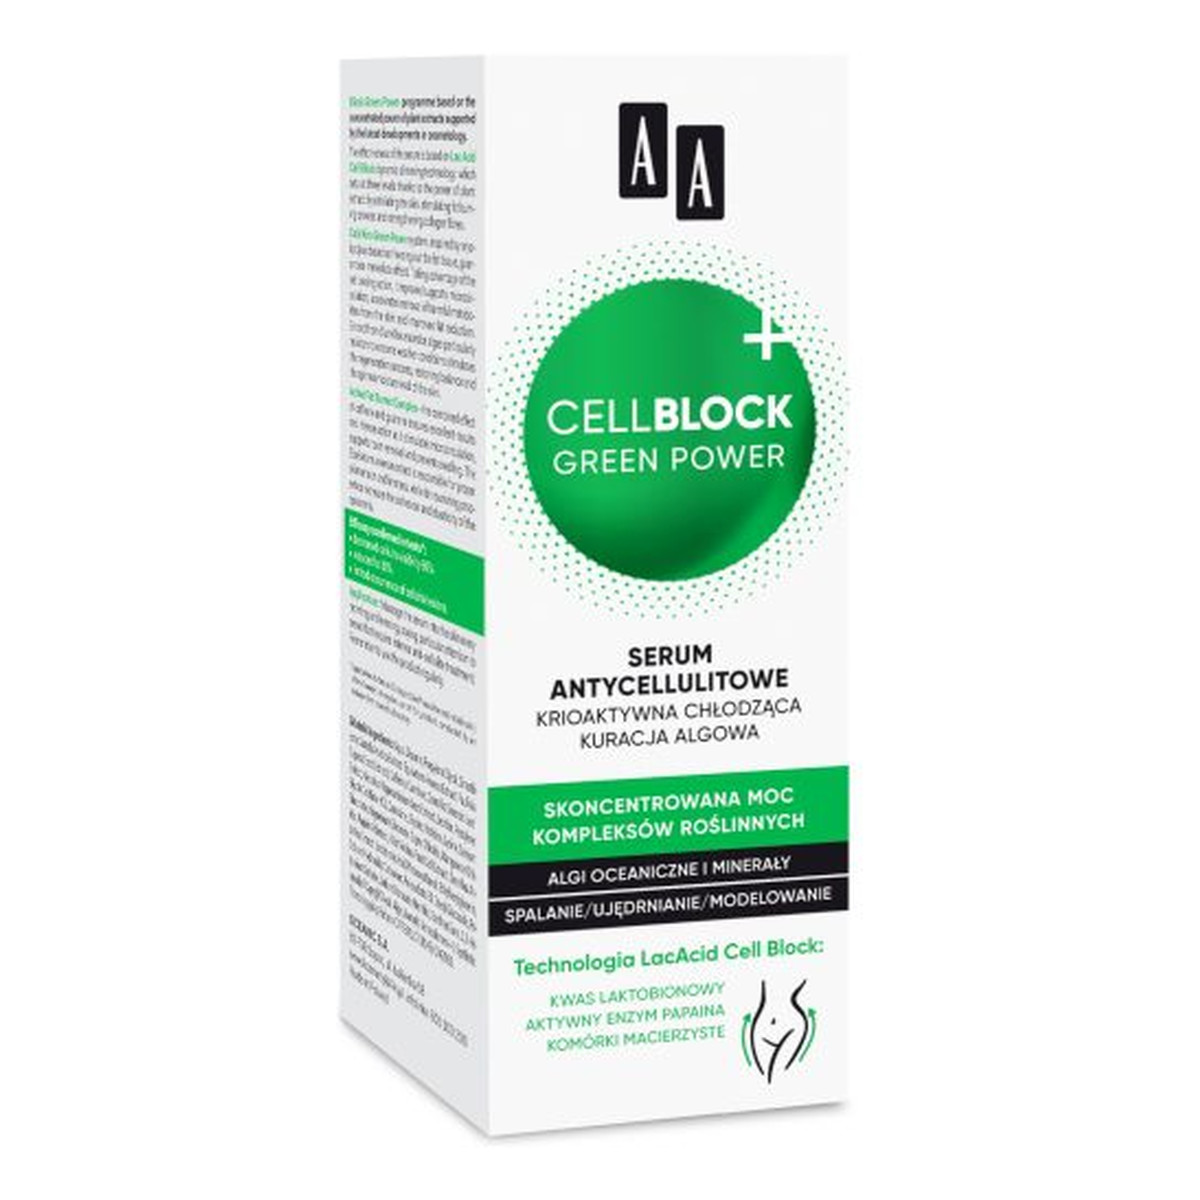 AA Cell Block Green Power Serum antycellulitowe x 3 (2+1 gratis) 200ml